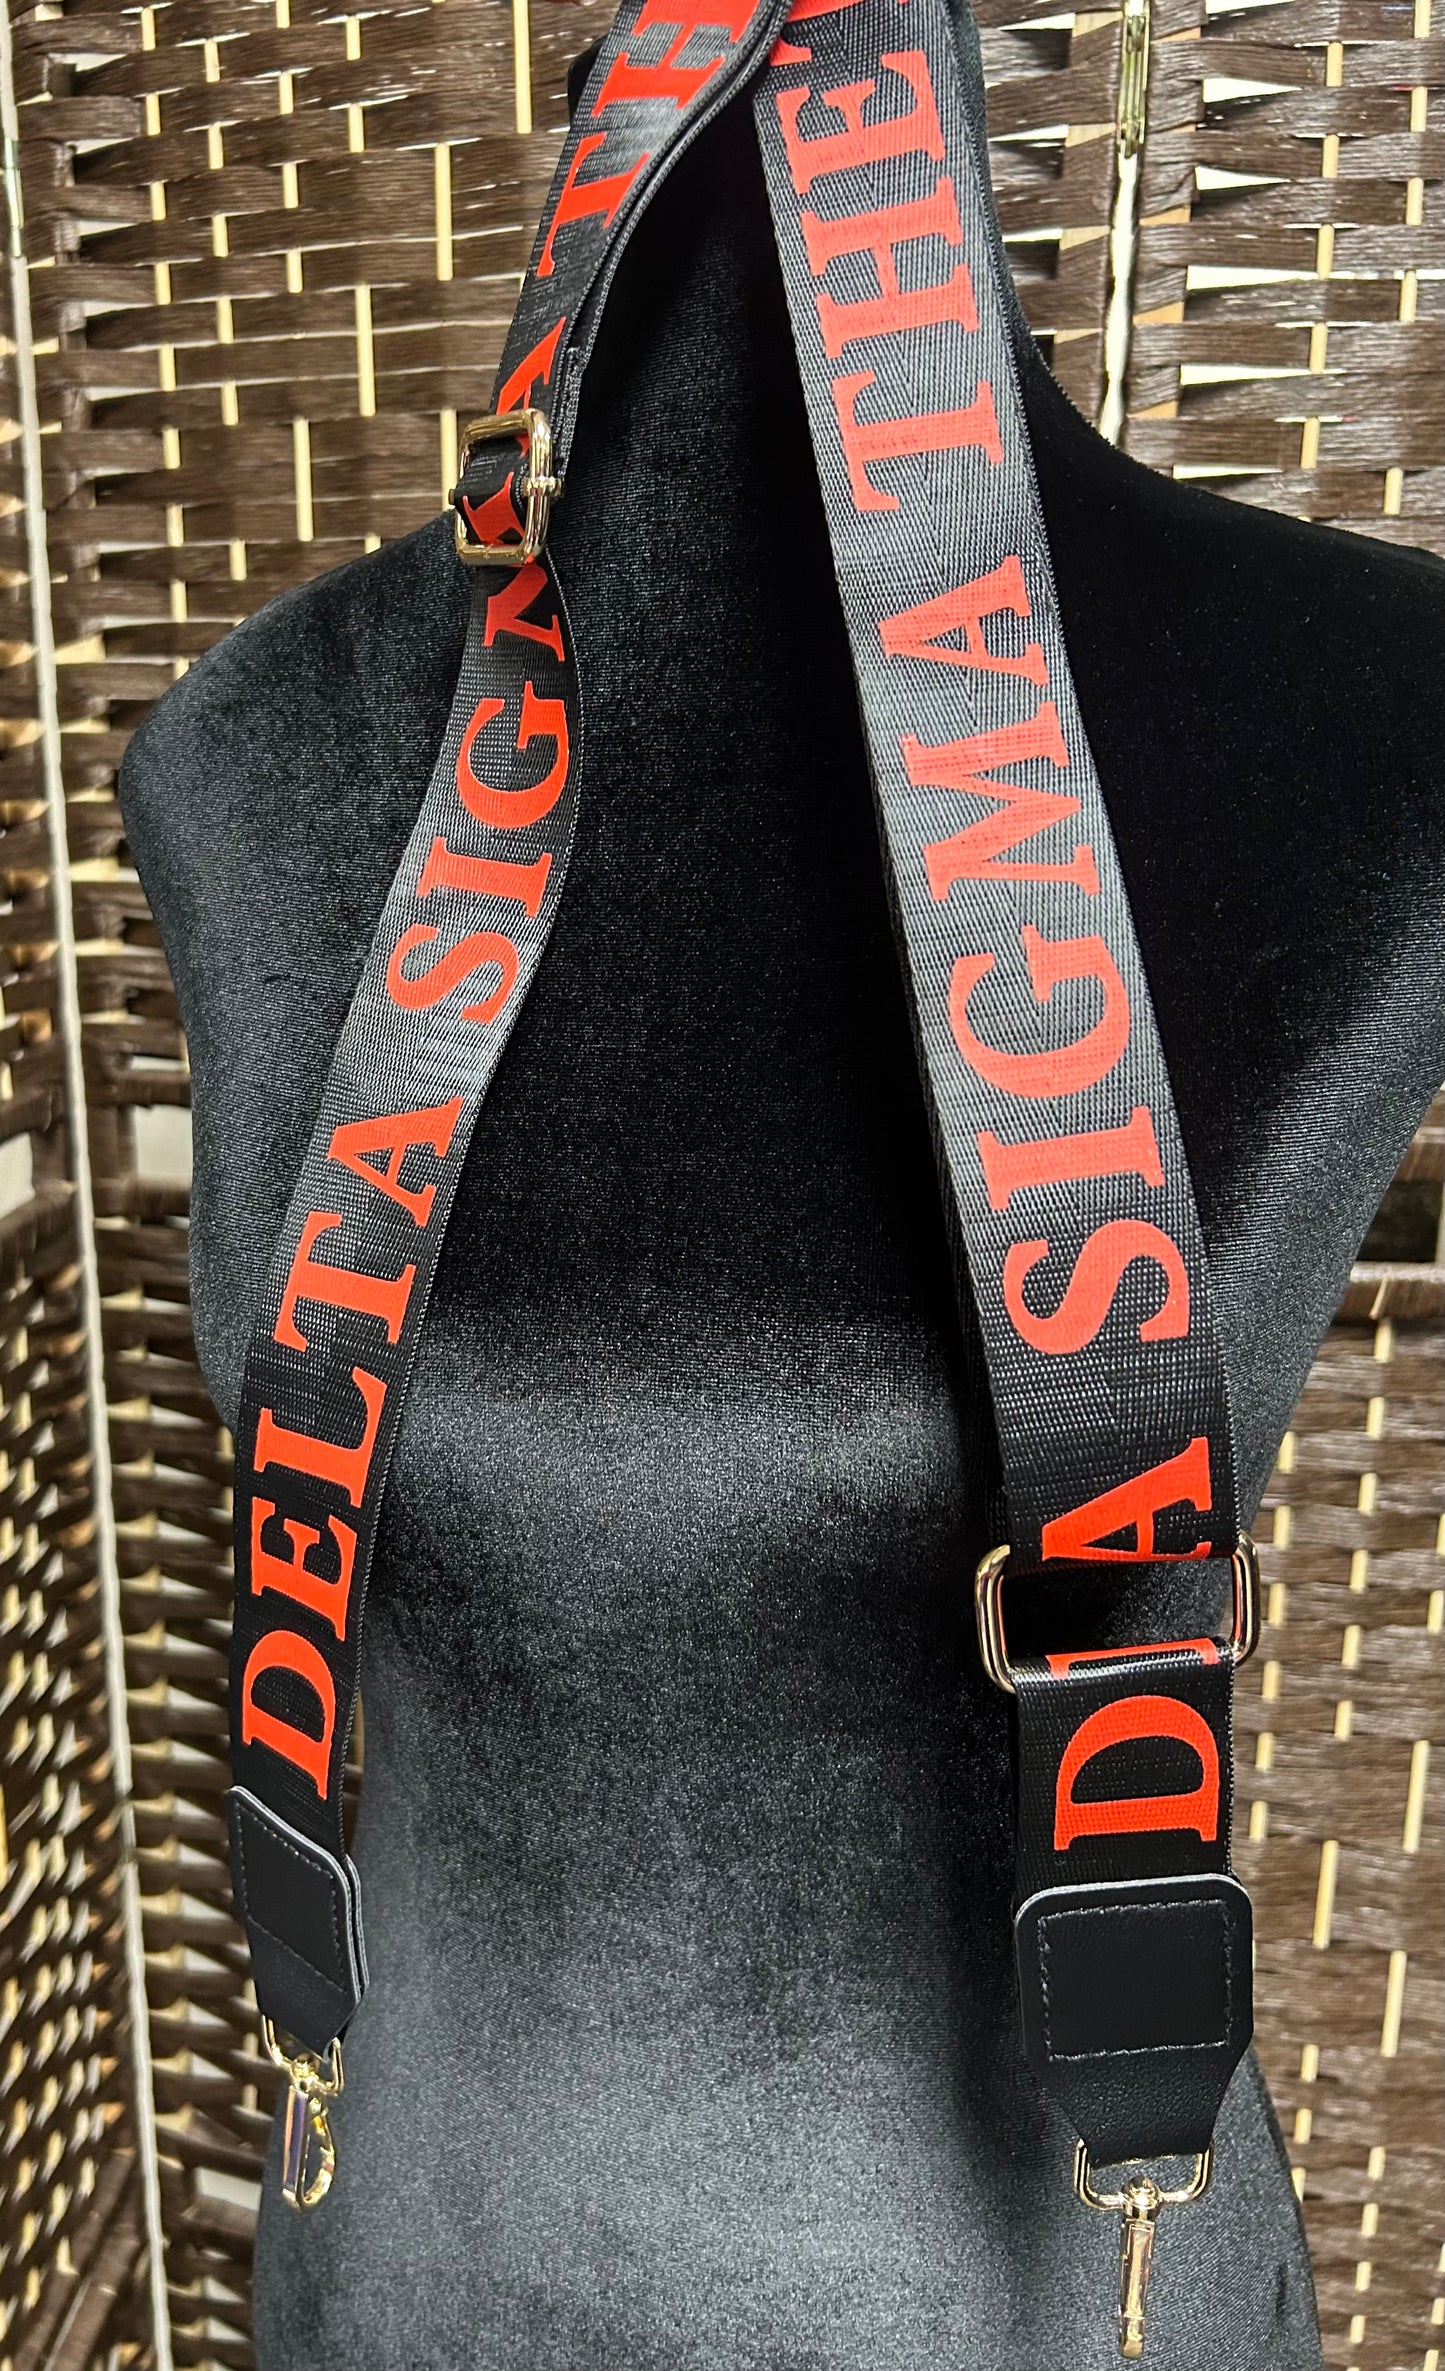 Adjustable purse straps